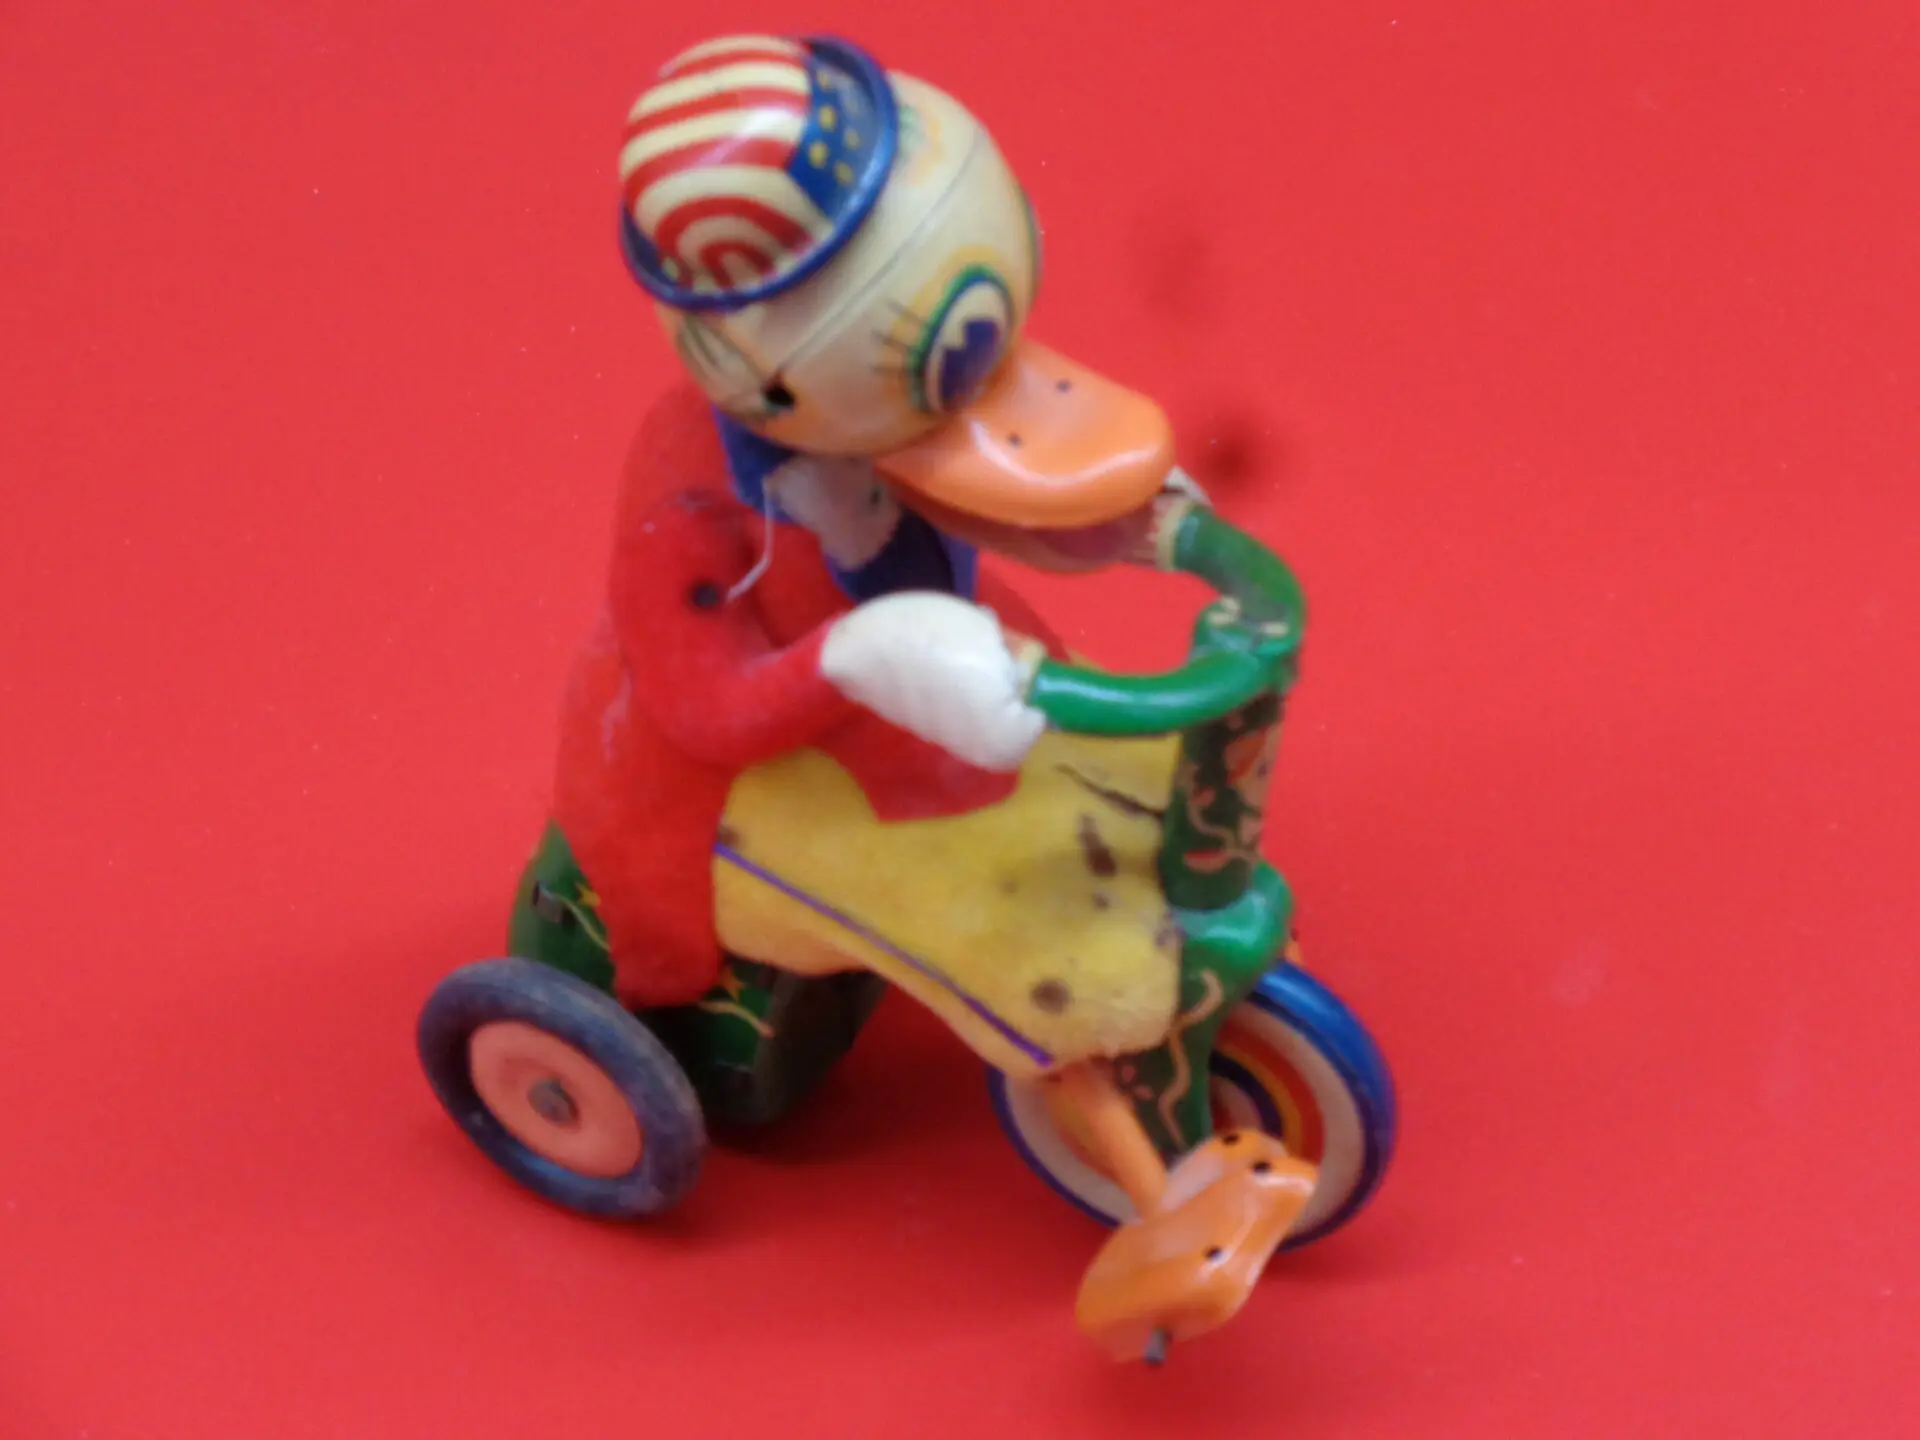 Vintage duck-on-a-bike toy